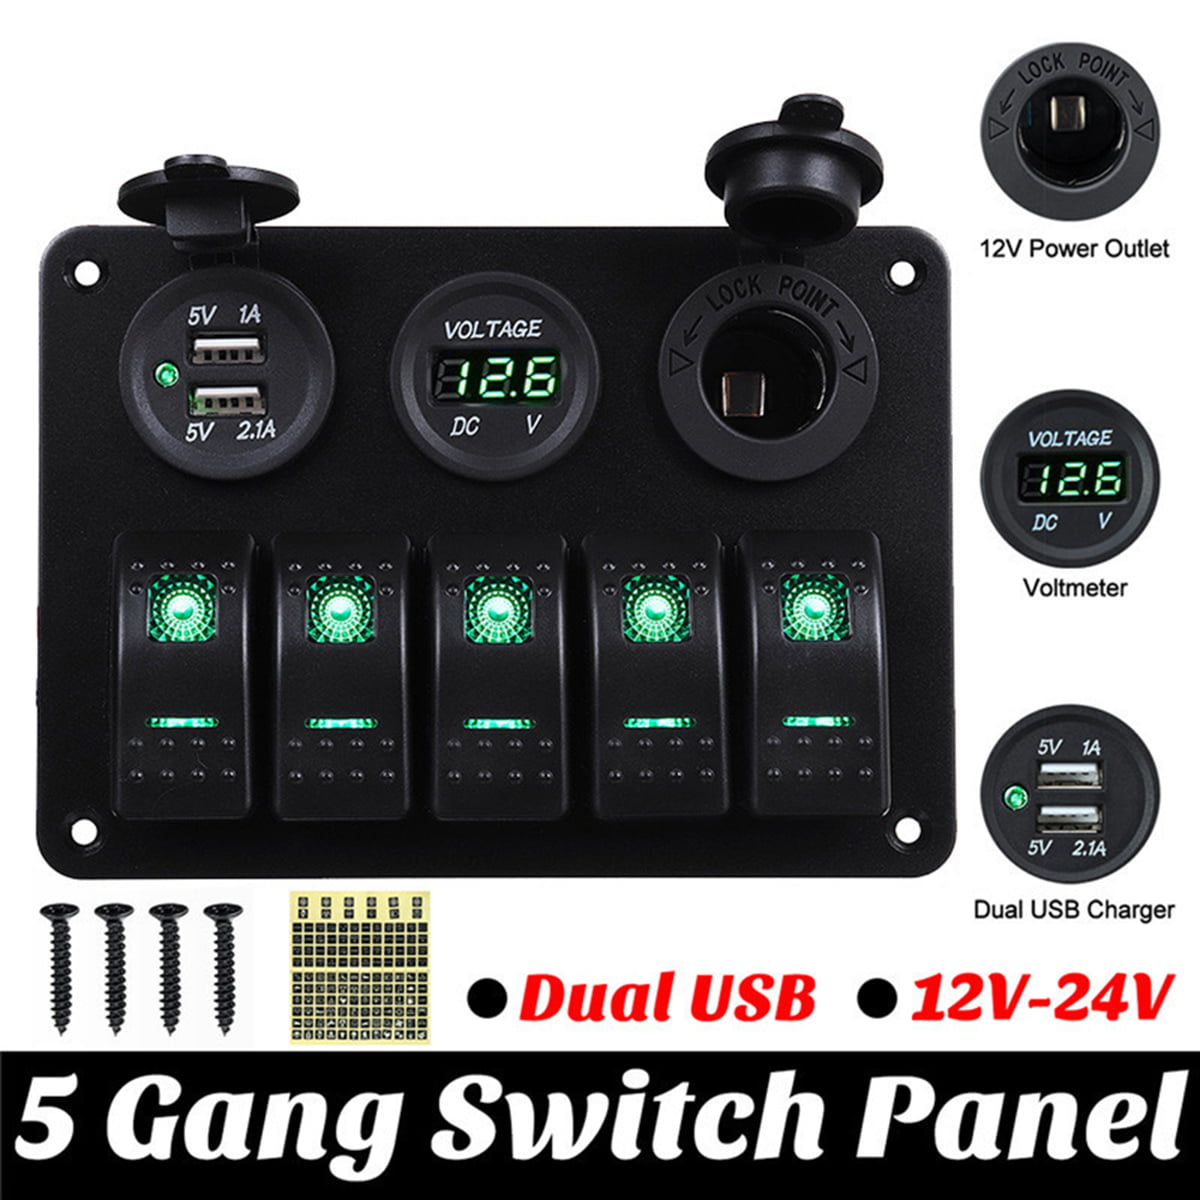 5 Gang LED Rocker Switch Control Panel 12V 24V Car Boat Marine 2 USB W/120 Decal 